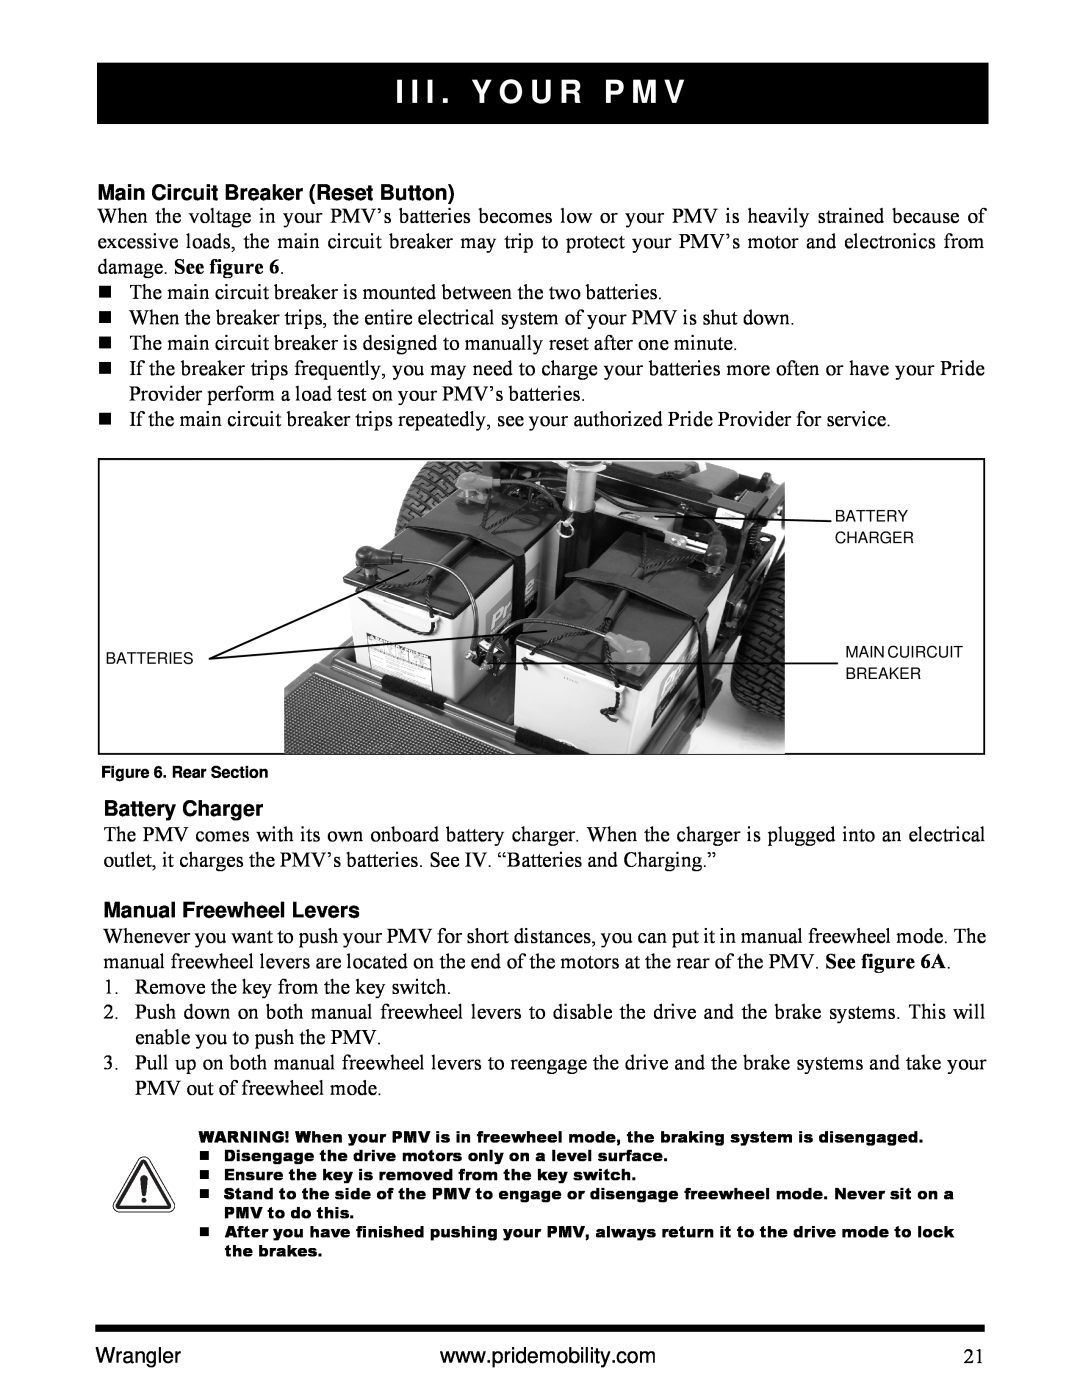 Pride Mobility I NFMANU1138 manual Main Circuit Breaker Reset Button, Battery Charger, Manual Freewheel Levers, Wrangler 